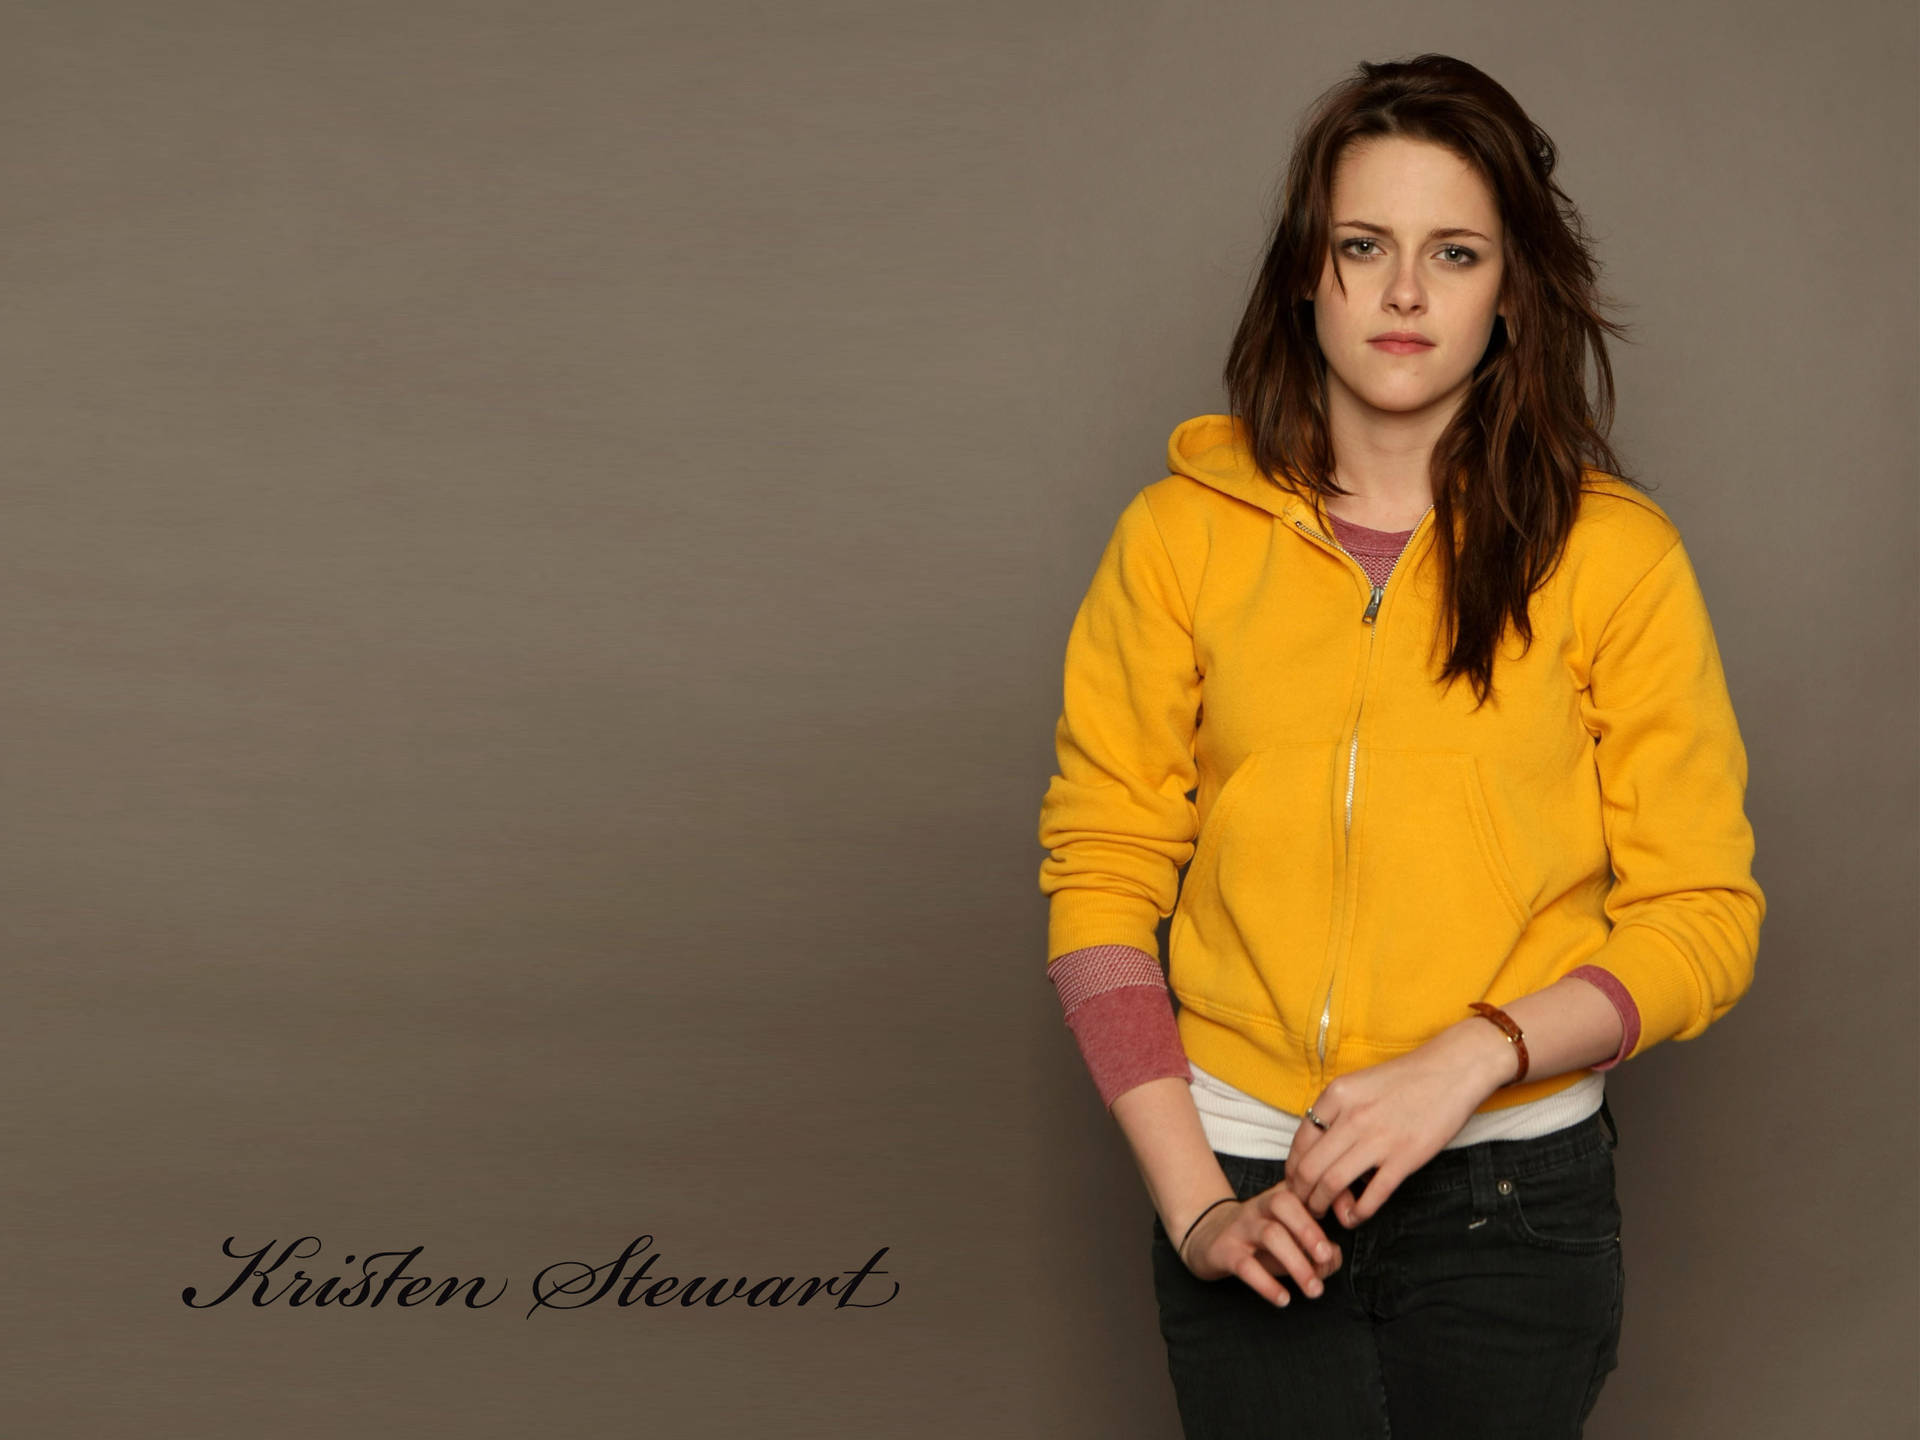 Kristen Stewart Yellow Sweatshirt Wallpaper